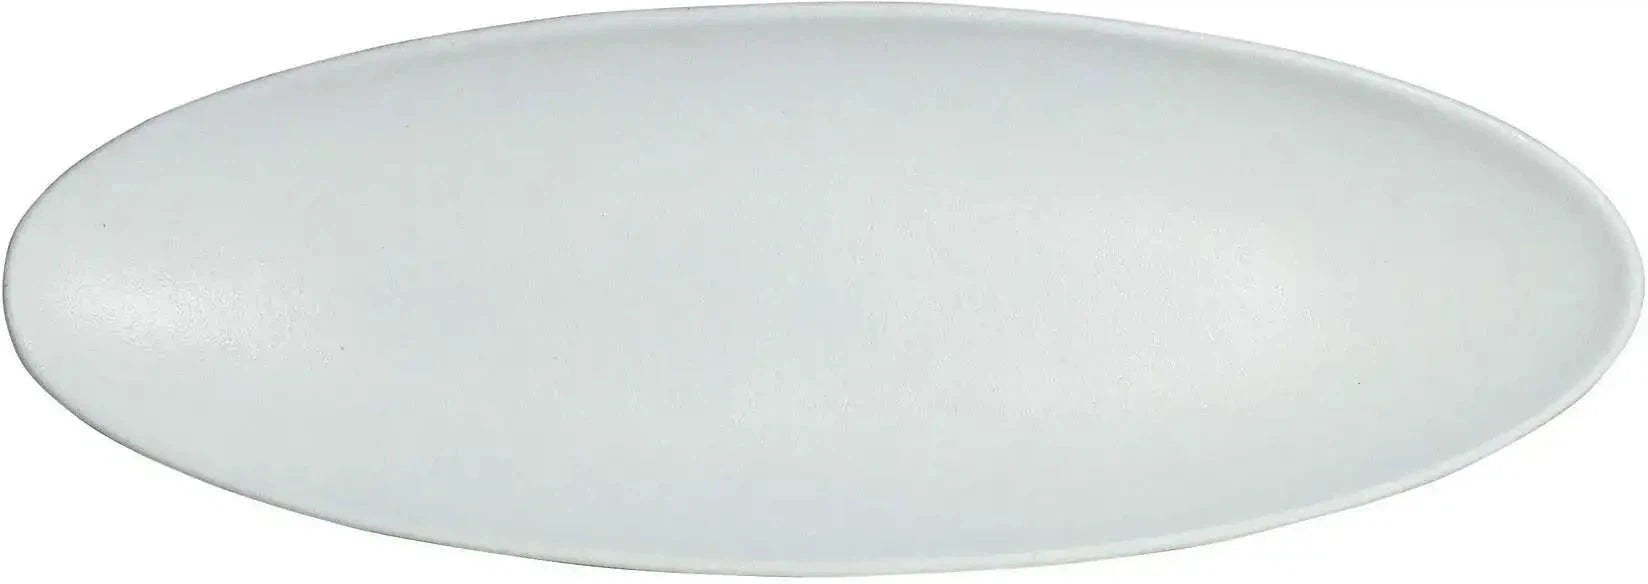 Bugambilia - Mod 3.4 Qt Medium Oval White Fruit Bowl With Glossy Smooth Finish - FO003-MOD-WW